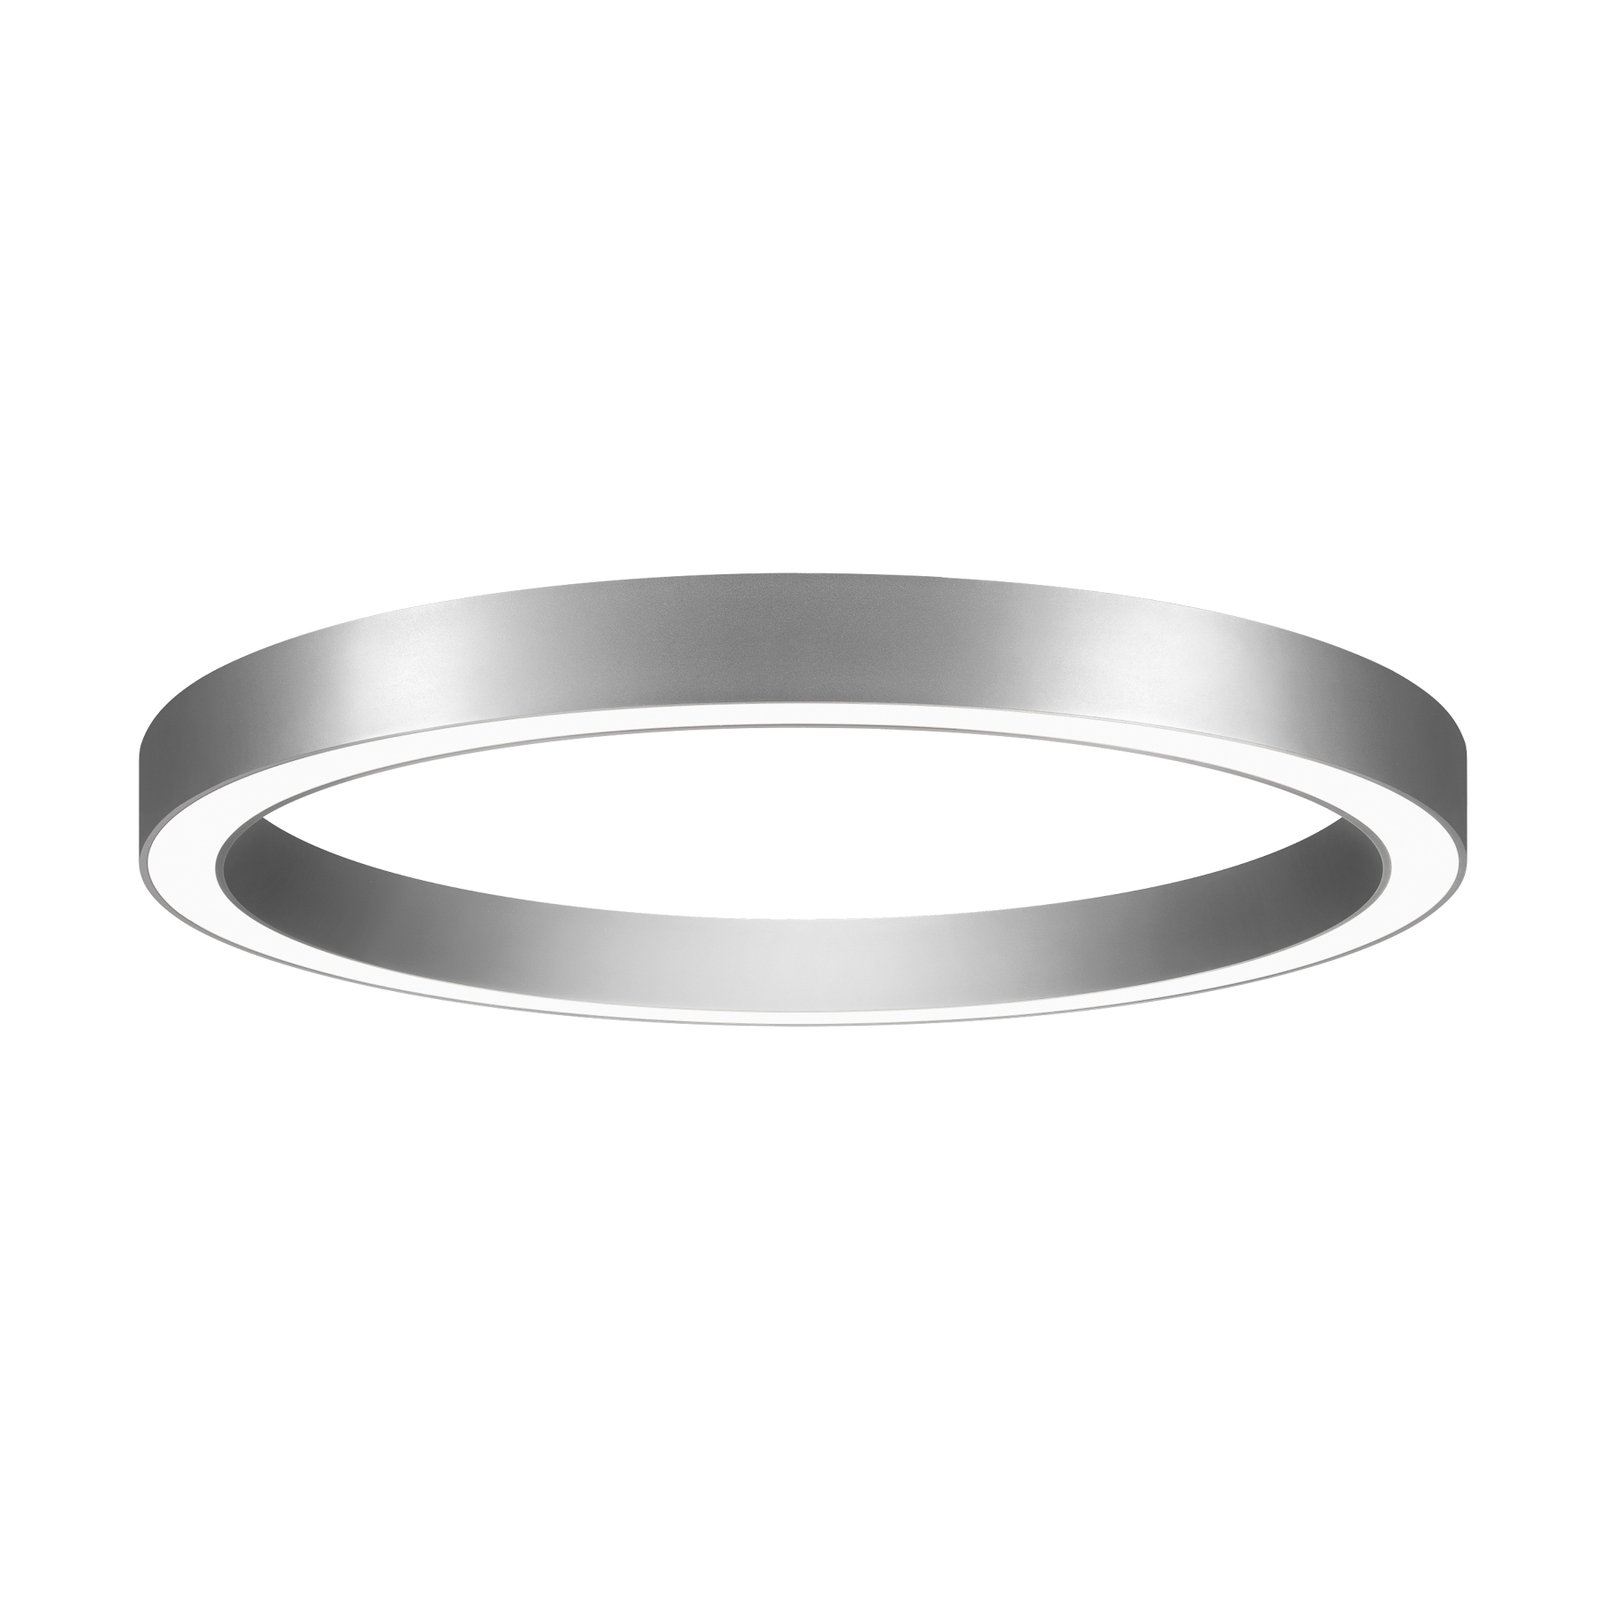 BRUMBERG Biro Circle Ring, Ø 45 cm, DALI, silver, 4,000 K